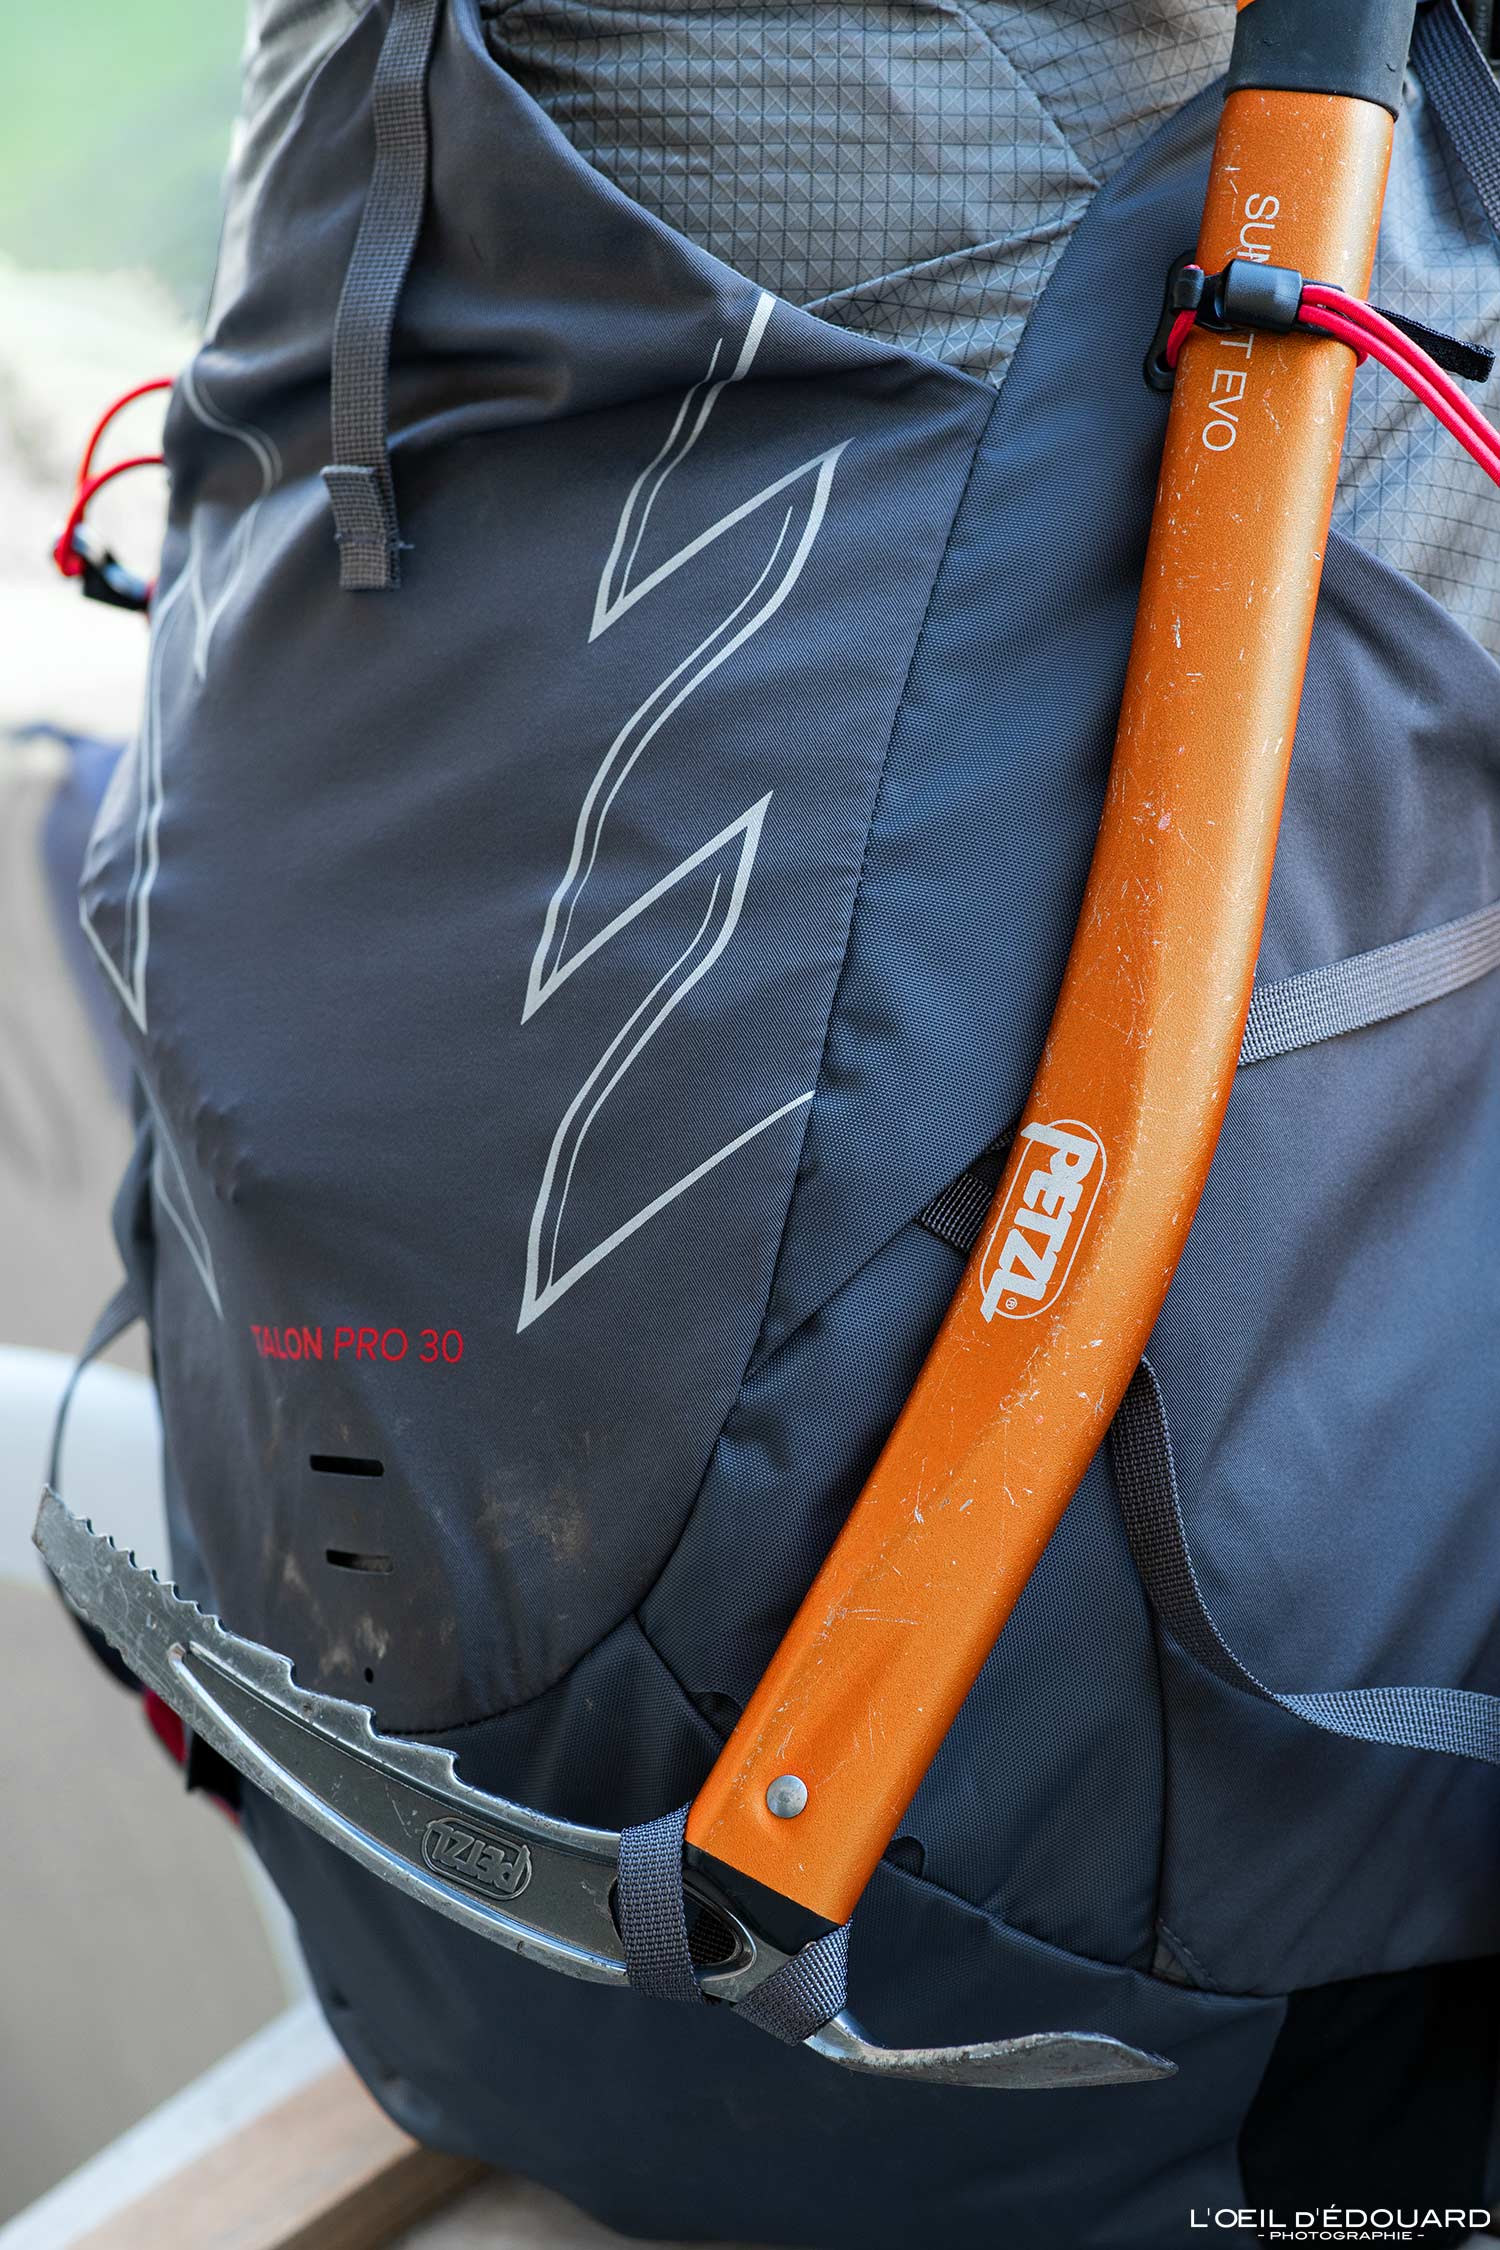 Porte-piolet Test Sac à dos Osprey Talon Pro 30 Backpack Review Randonnée Montagne Piolet Alpinisme Outdoor Hike Mountain Hiking Mountaineering Ice Axe Holder